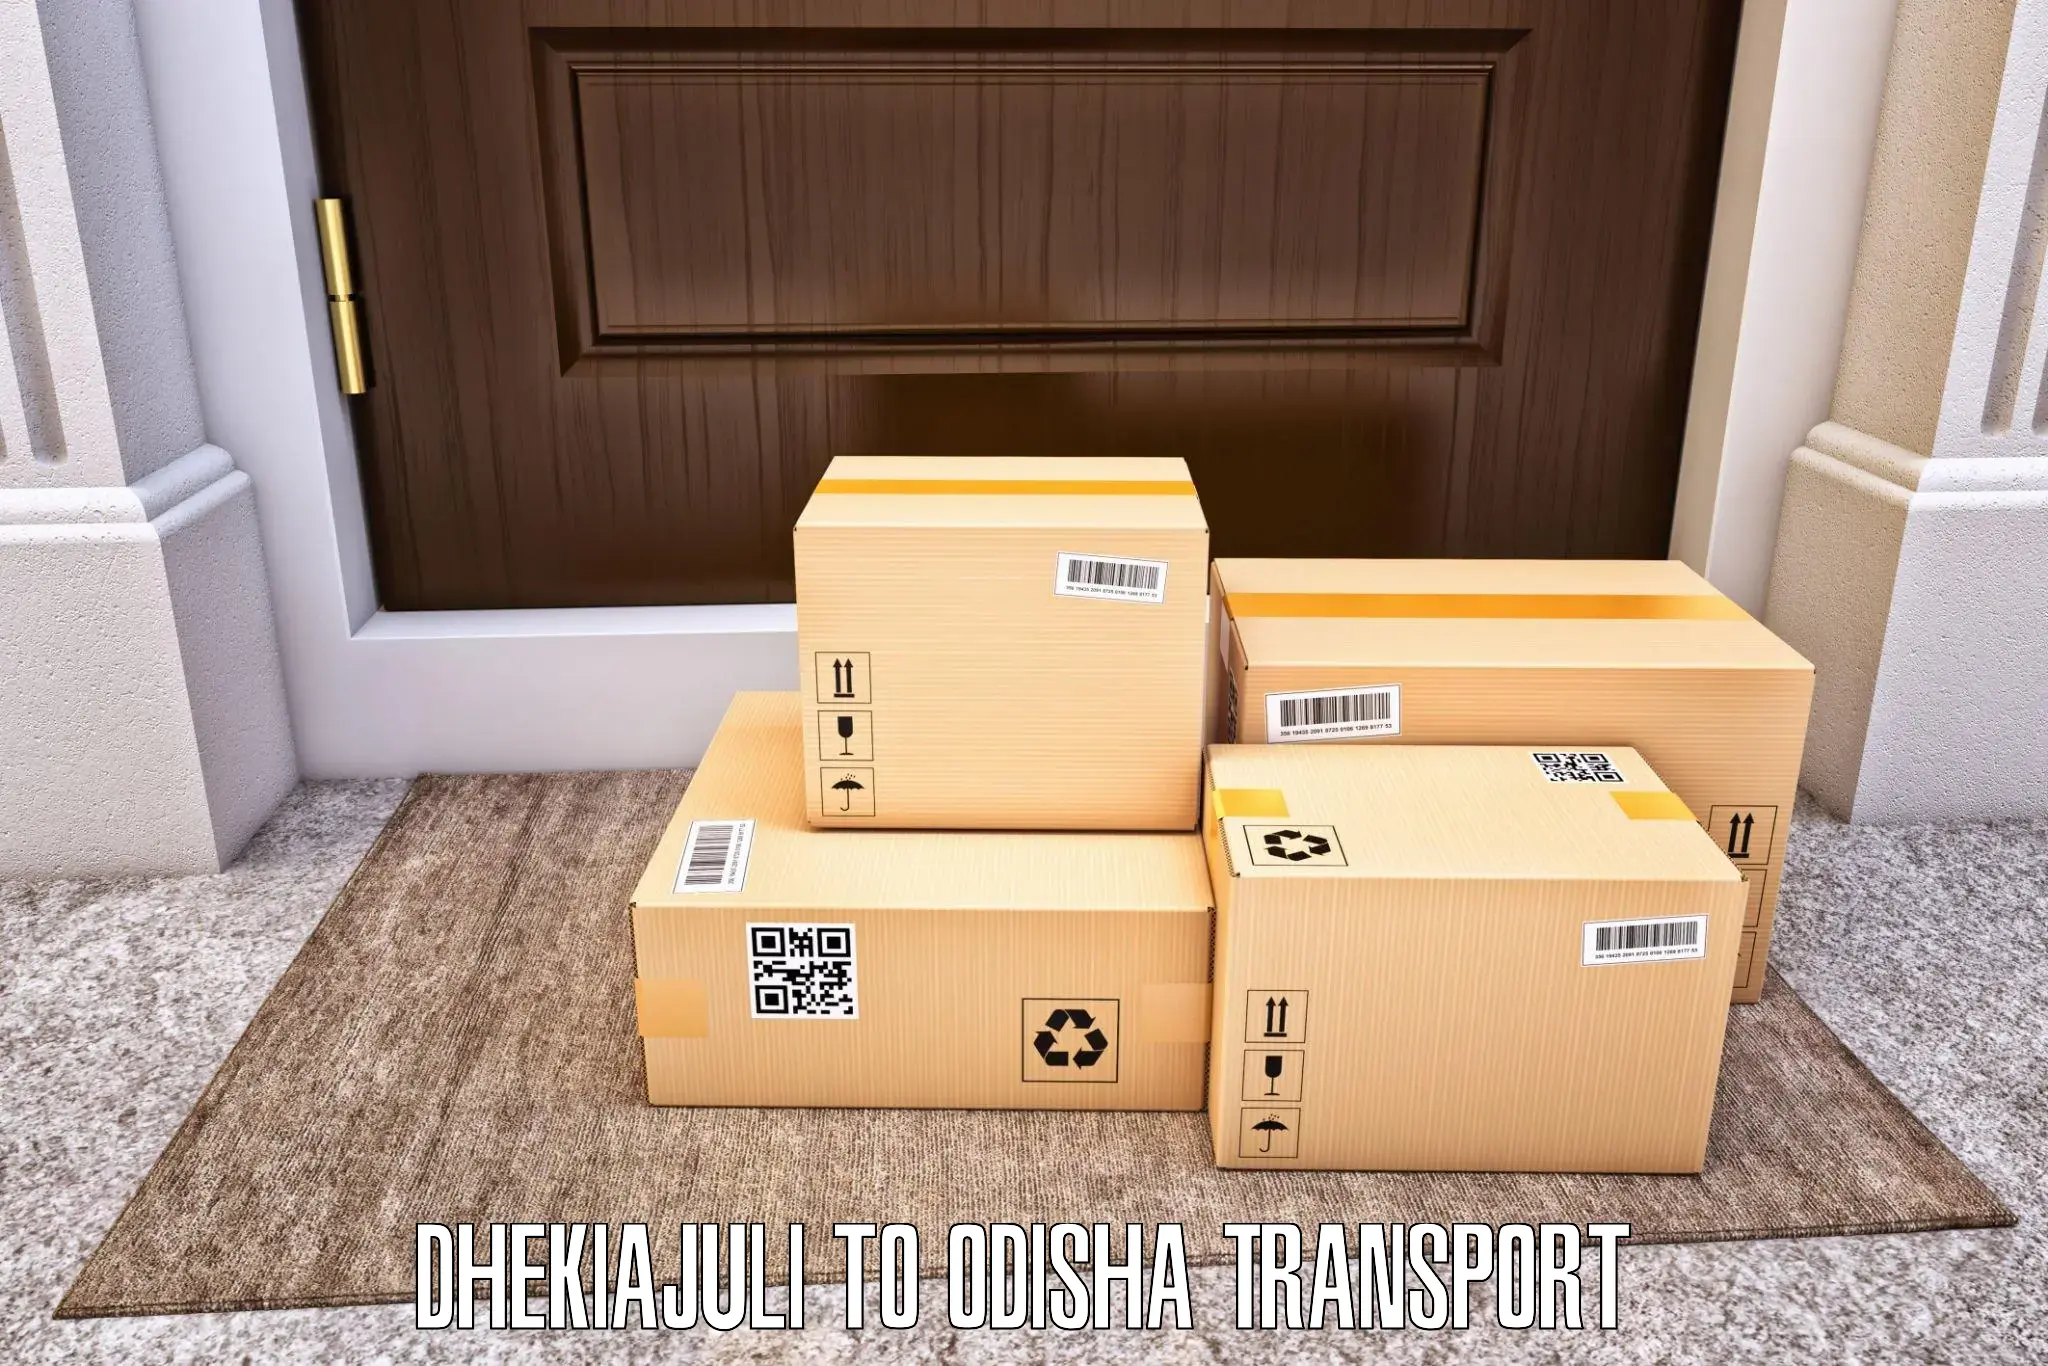 Transport shared services Dhekiajuli to Turanga